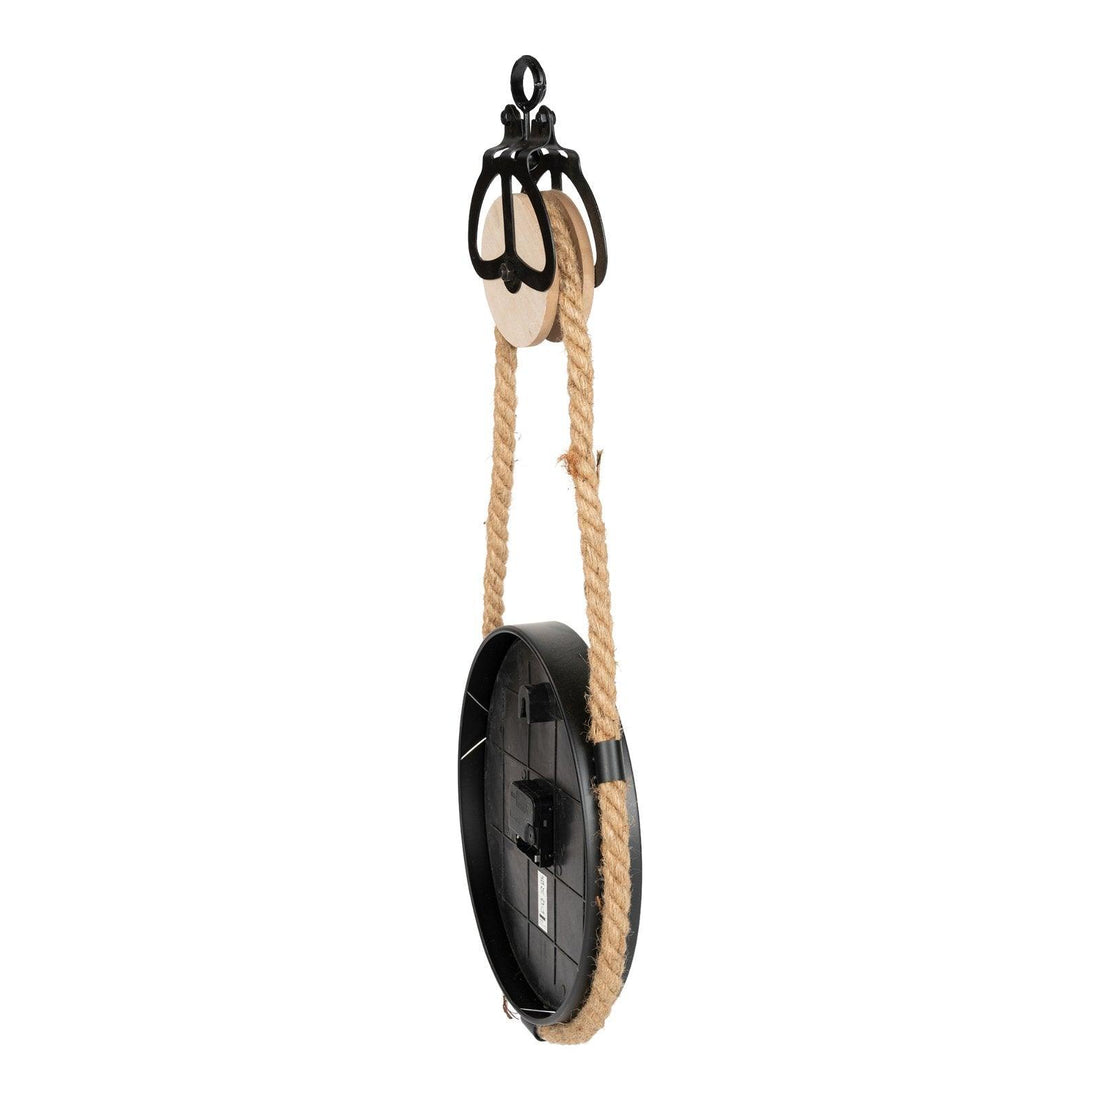 Industrial Hanging Rope Round Black Metal Clock - £49.99 - Wall Hanging Clocks 